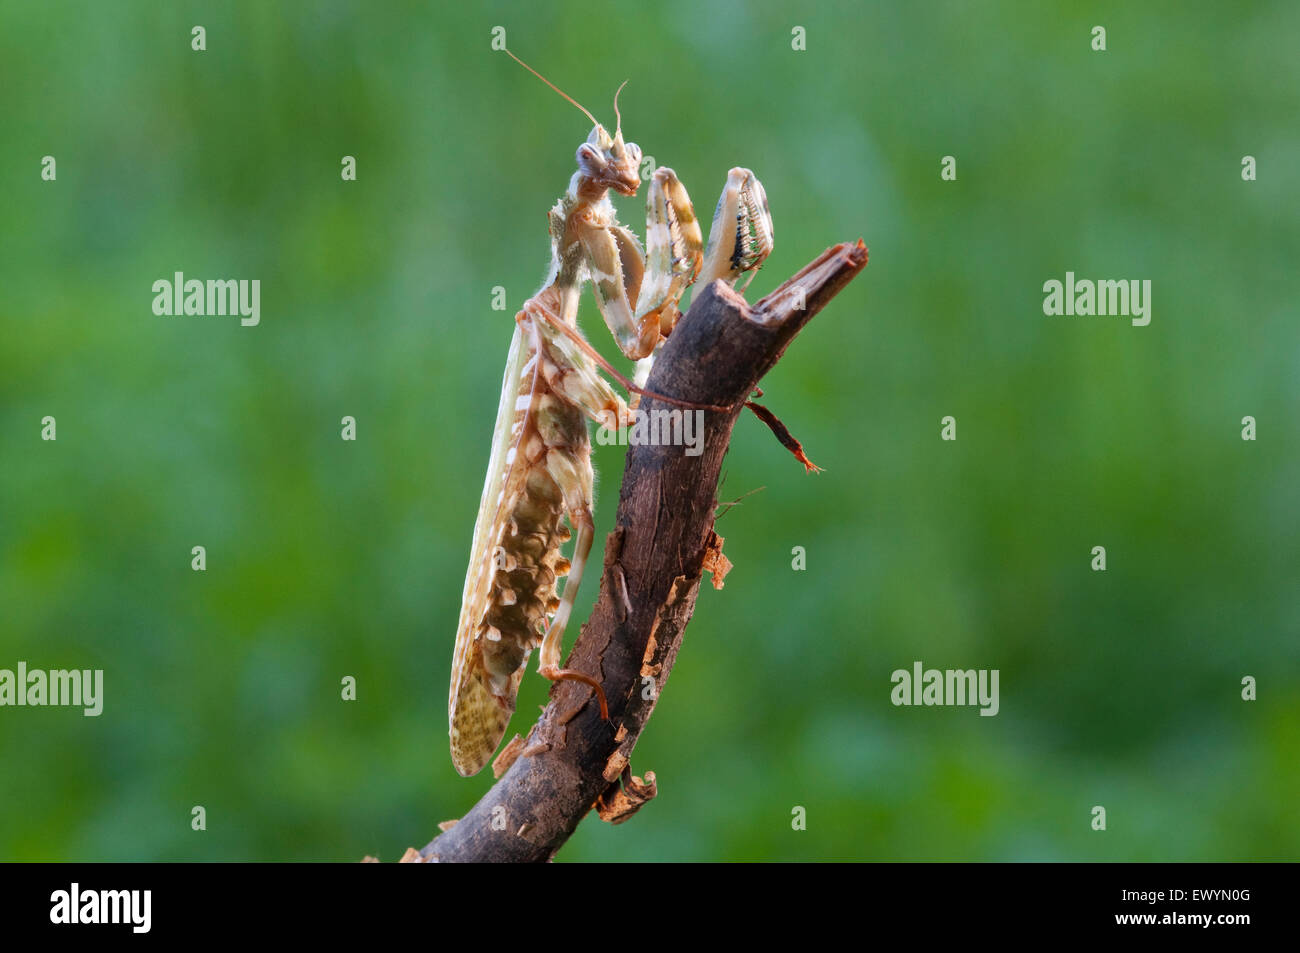 Mantis Stock Photo